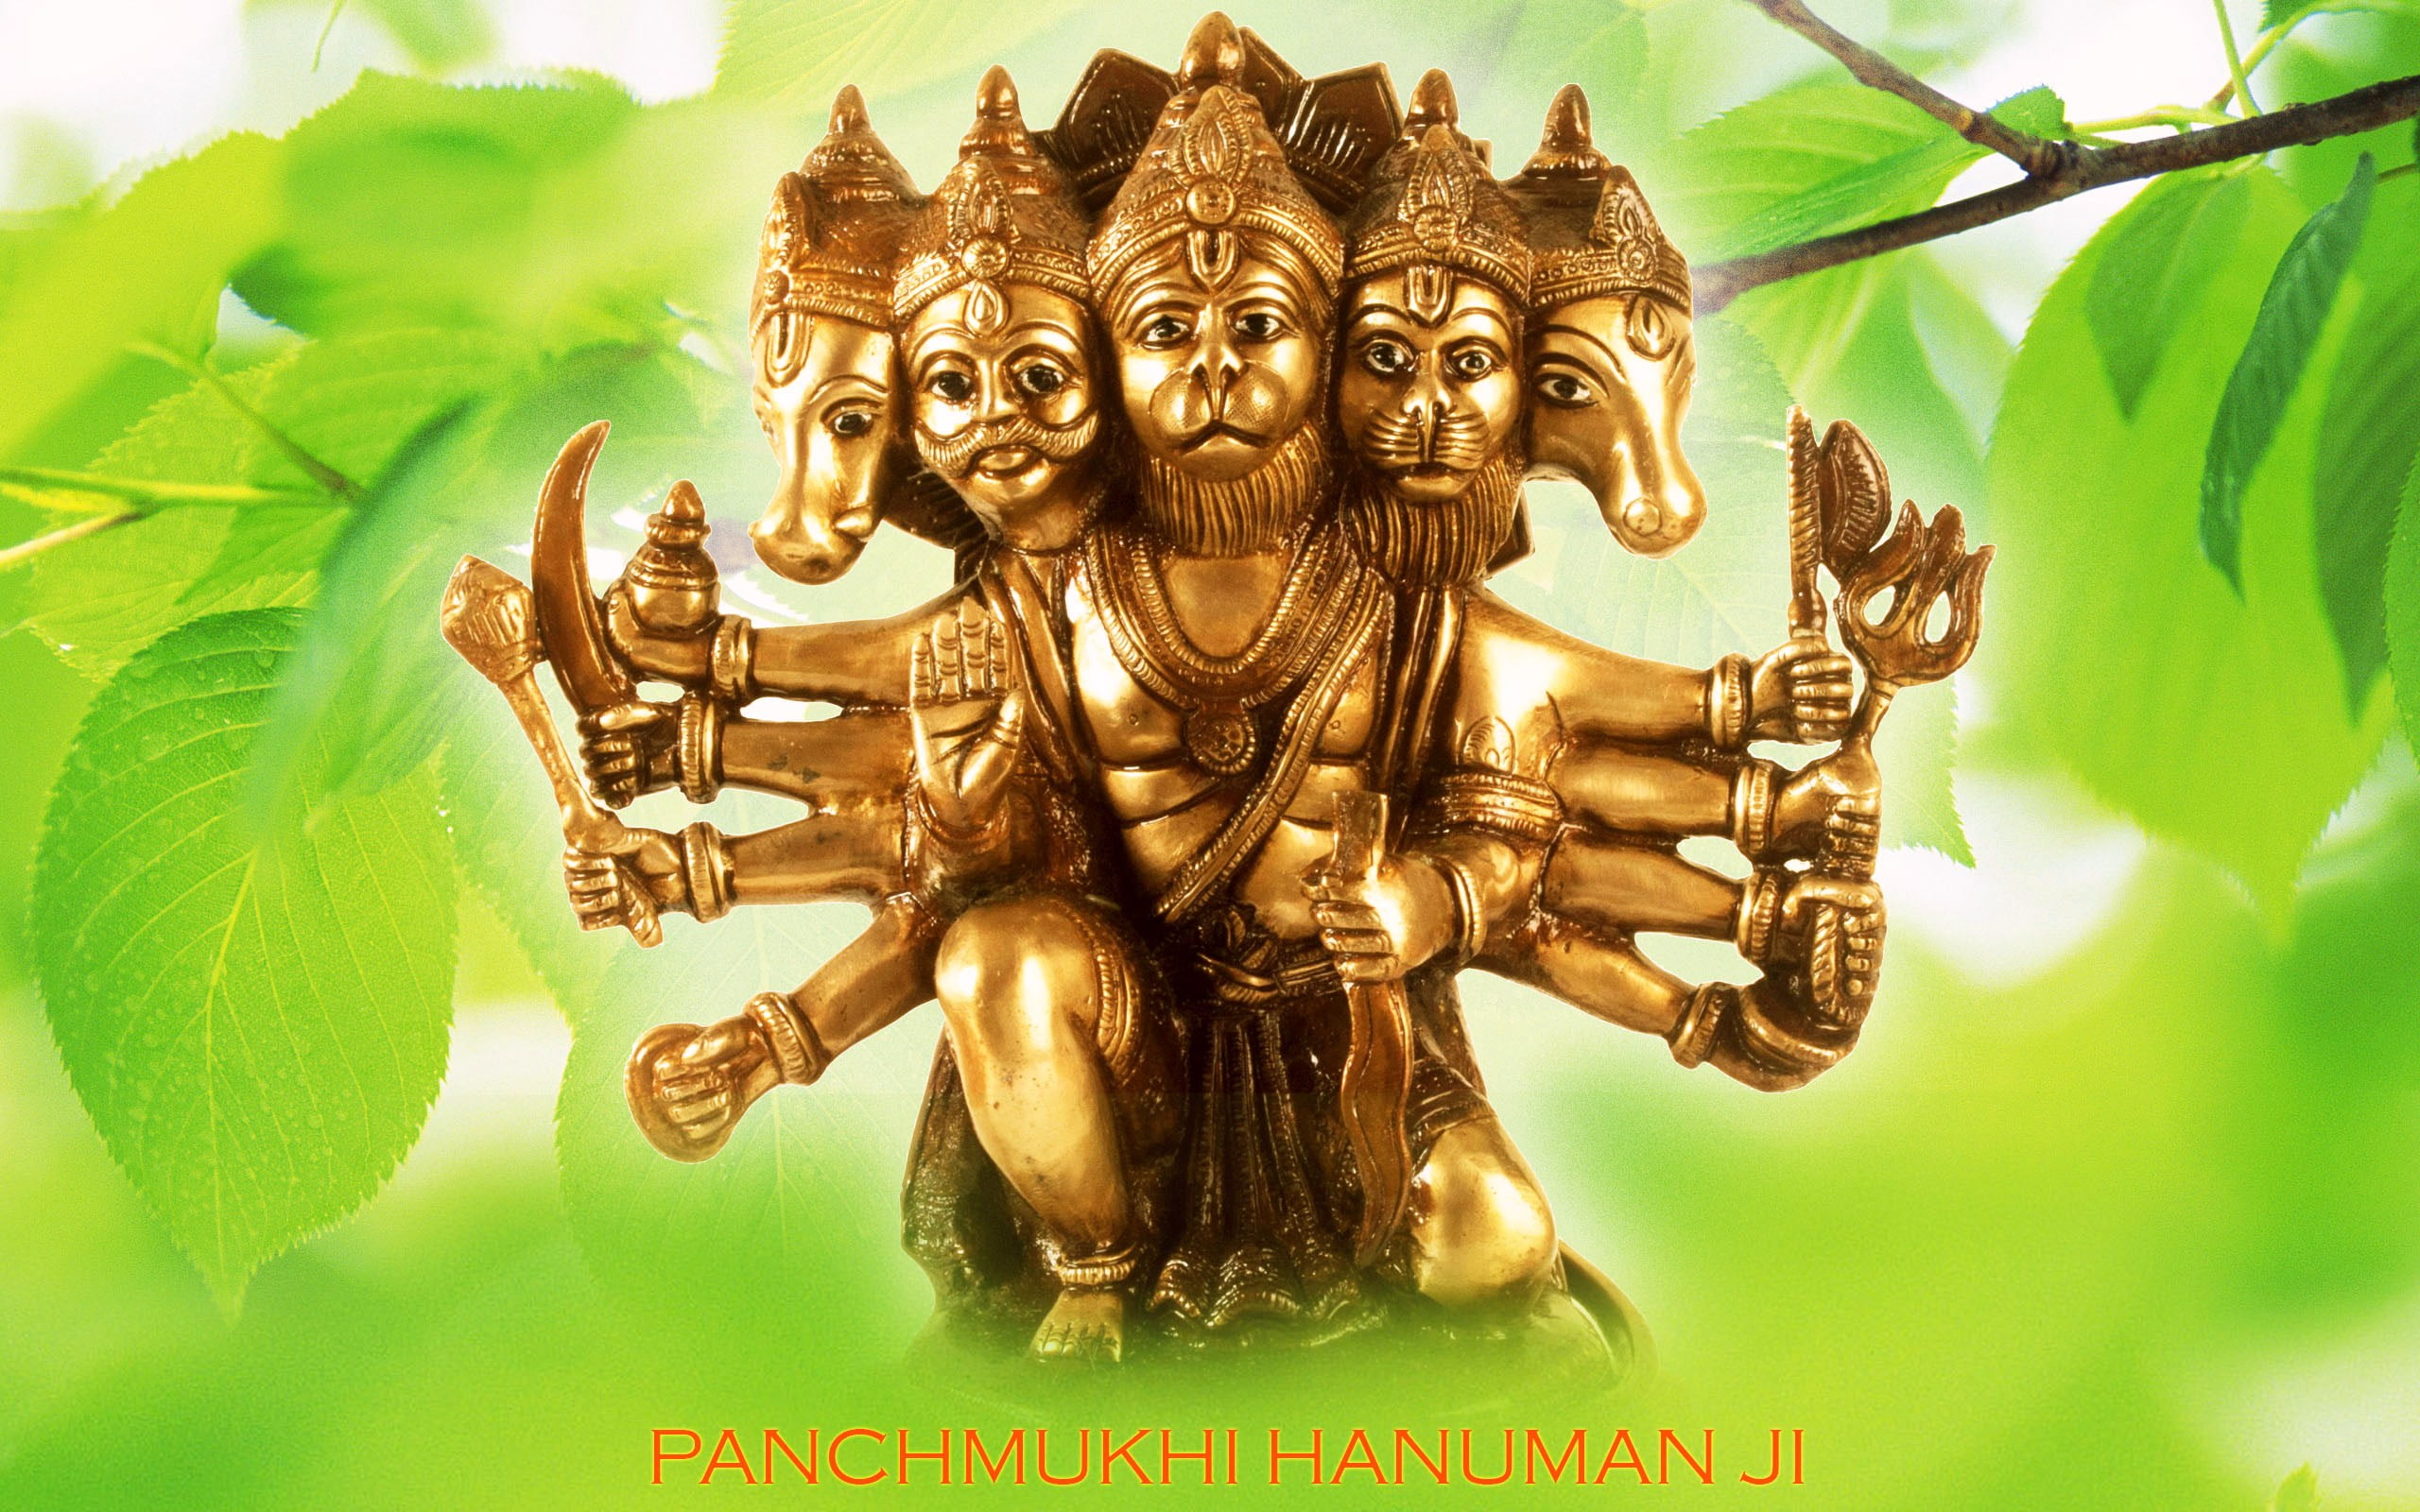 Panchmukhi Hanuman, Hindu Deity figurine, God, Lord Hanuman, belief